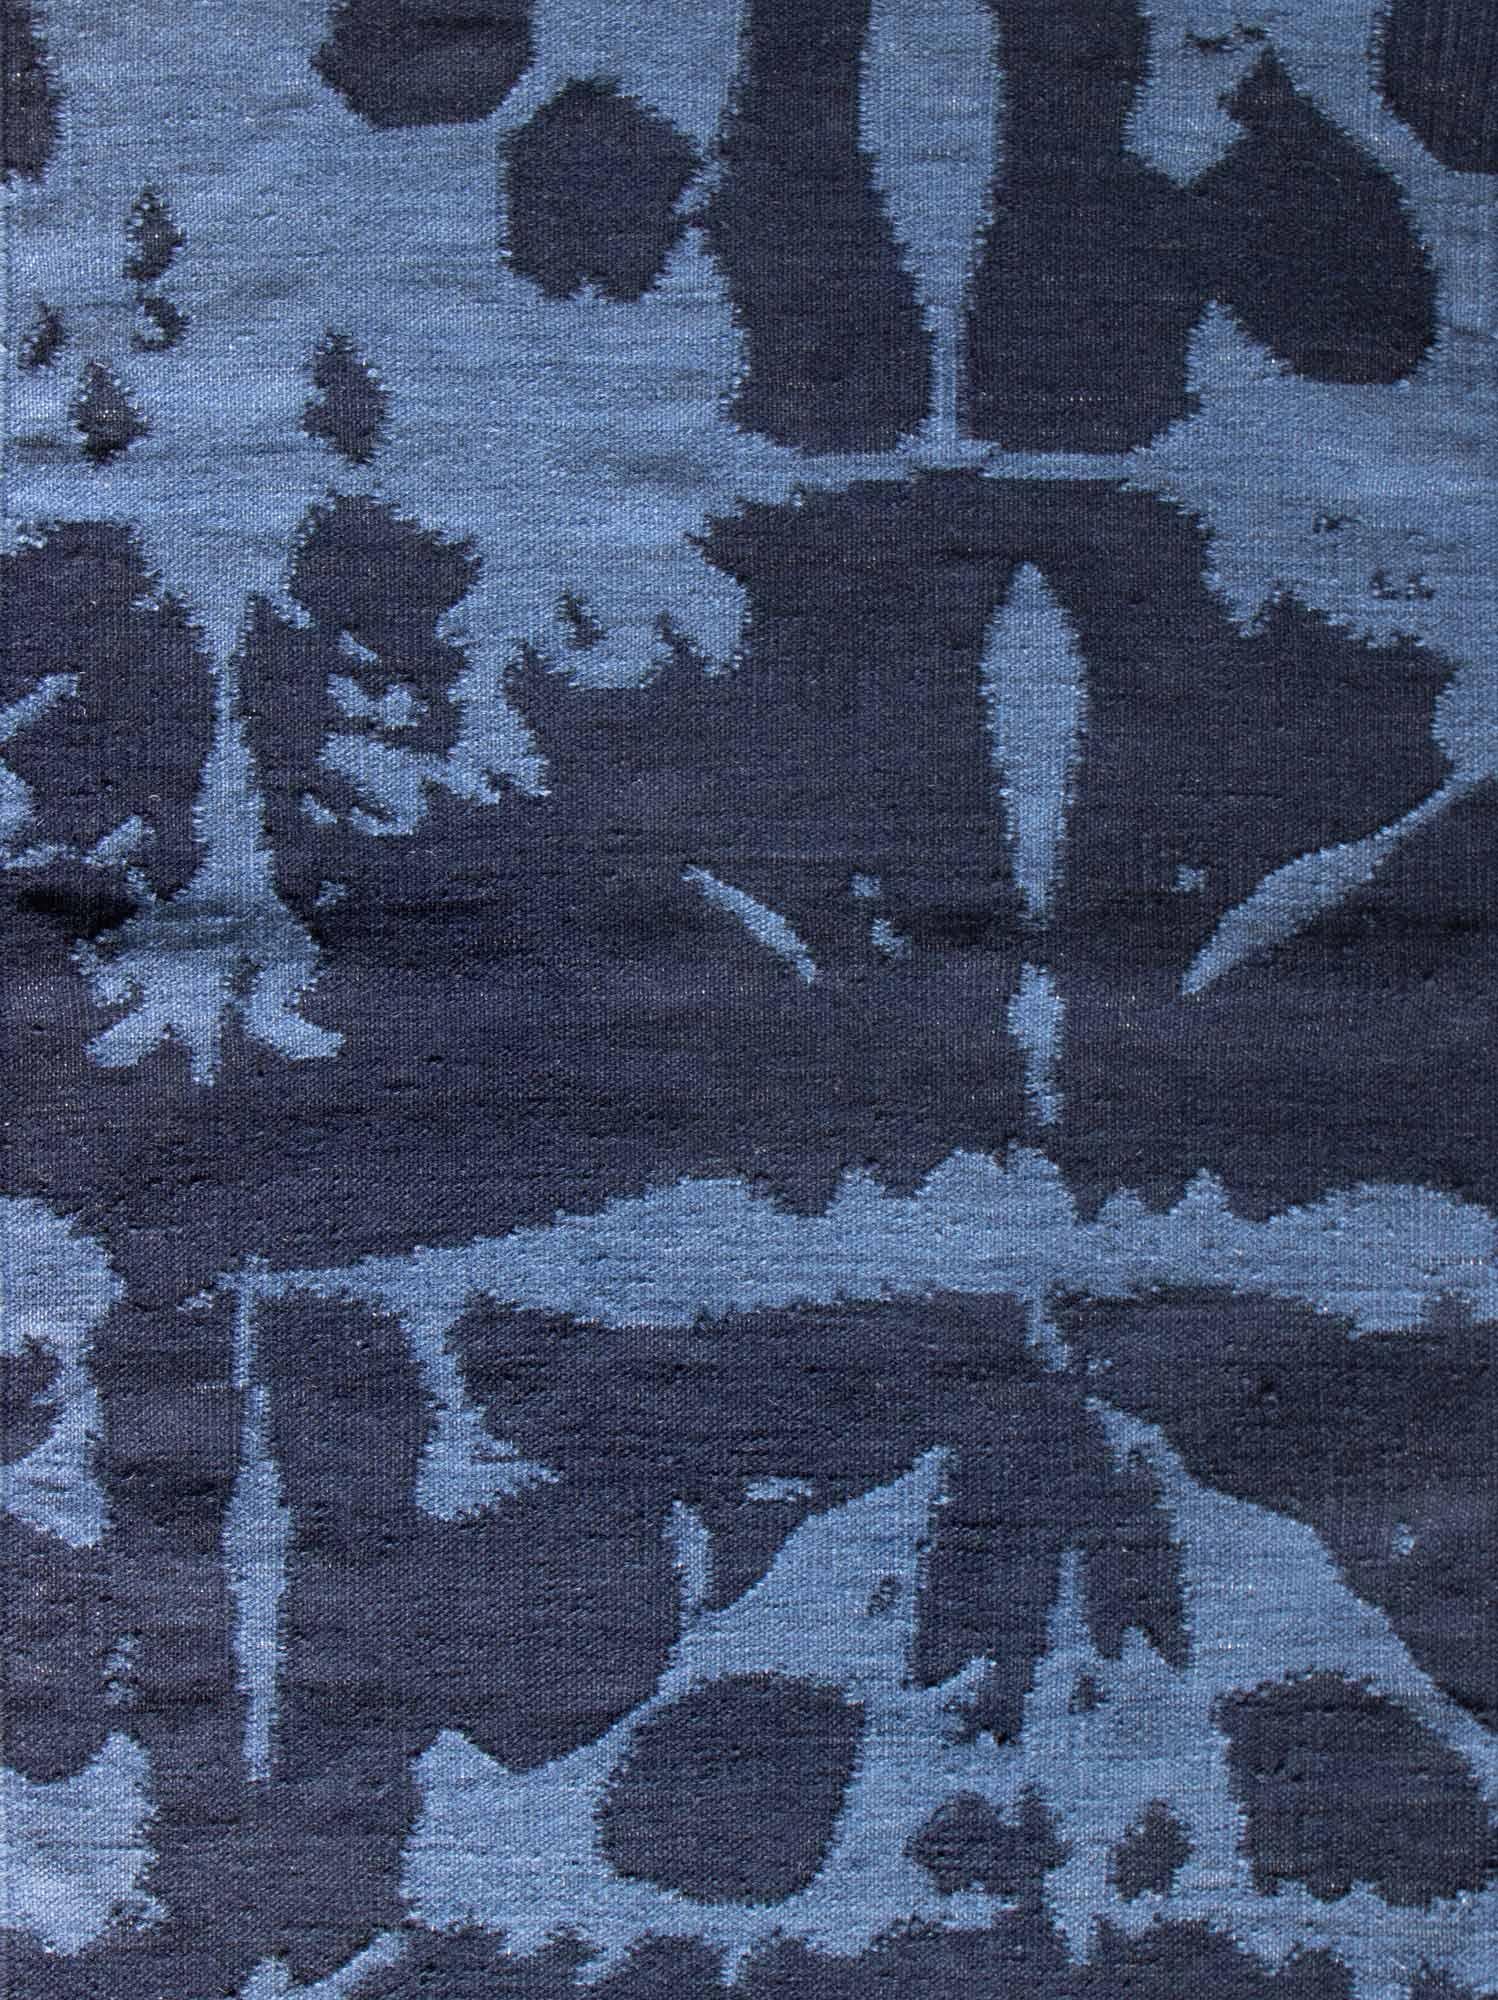 Rug Pattern: Banda - Indigo
Material: 100% New Zealand Wool
Quality: Flat-weave, handwoven 
Size: 6'-0